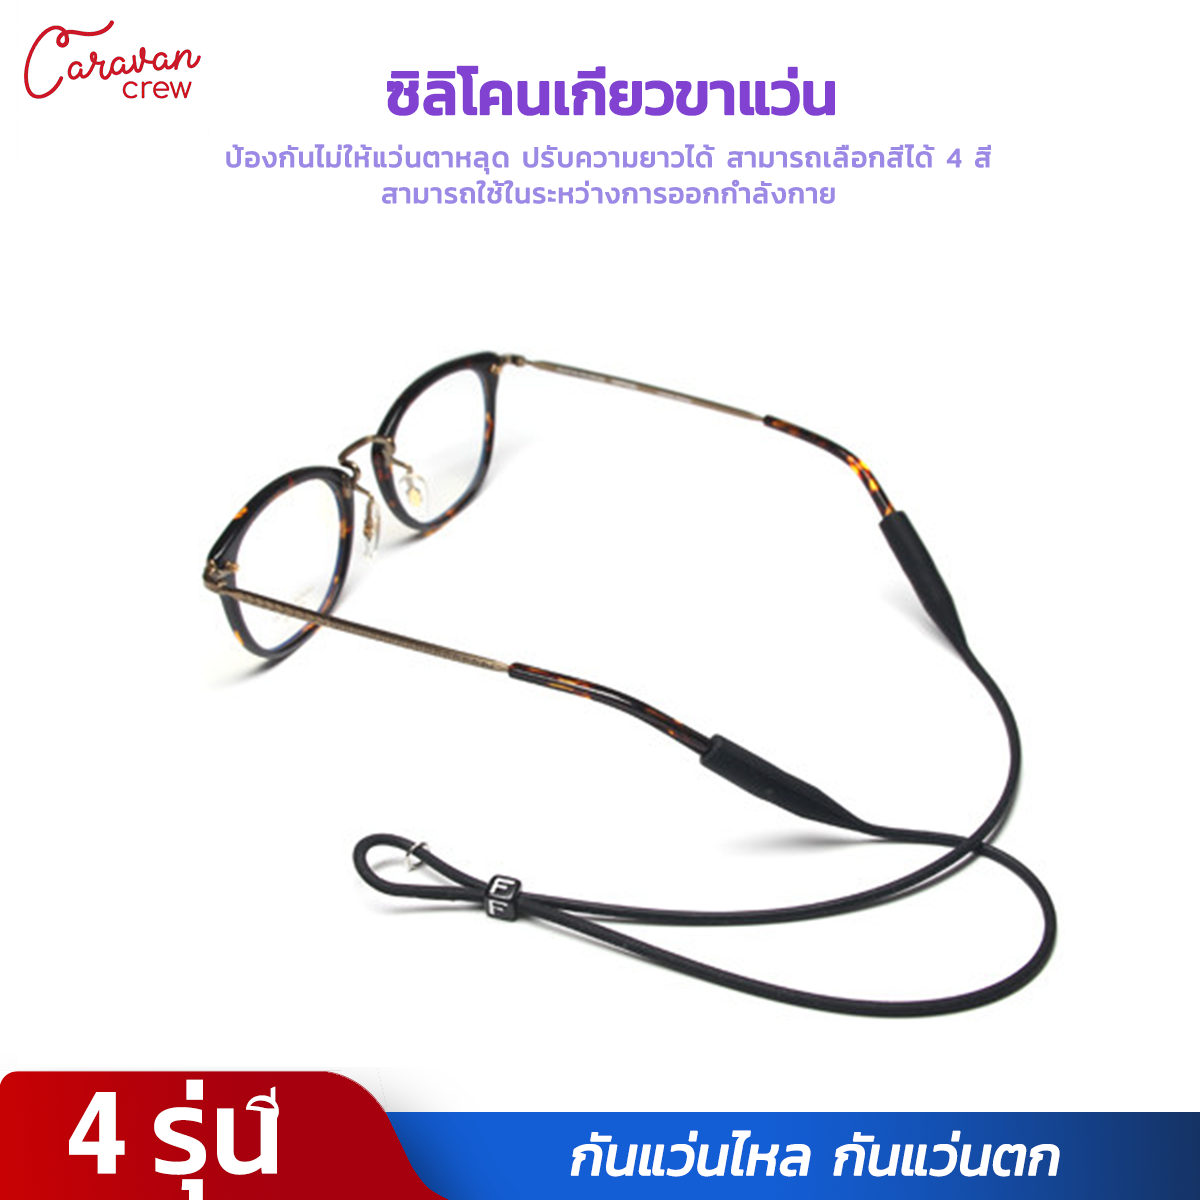 Eyeglass Cord Glasses Holder String Rope Chains Neck Strap String Rope Band Anti Slip Eyewear สายคล้องแว่นตา